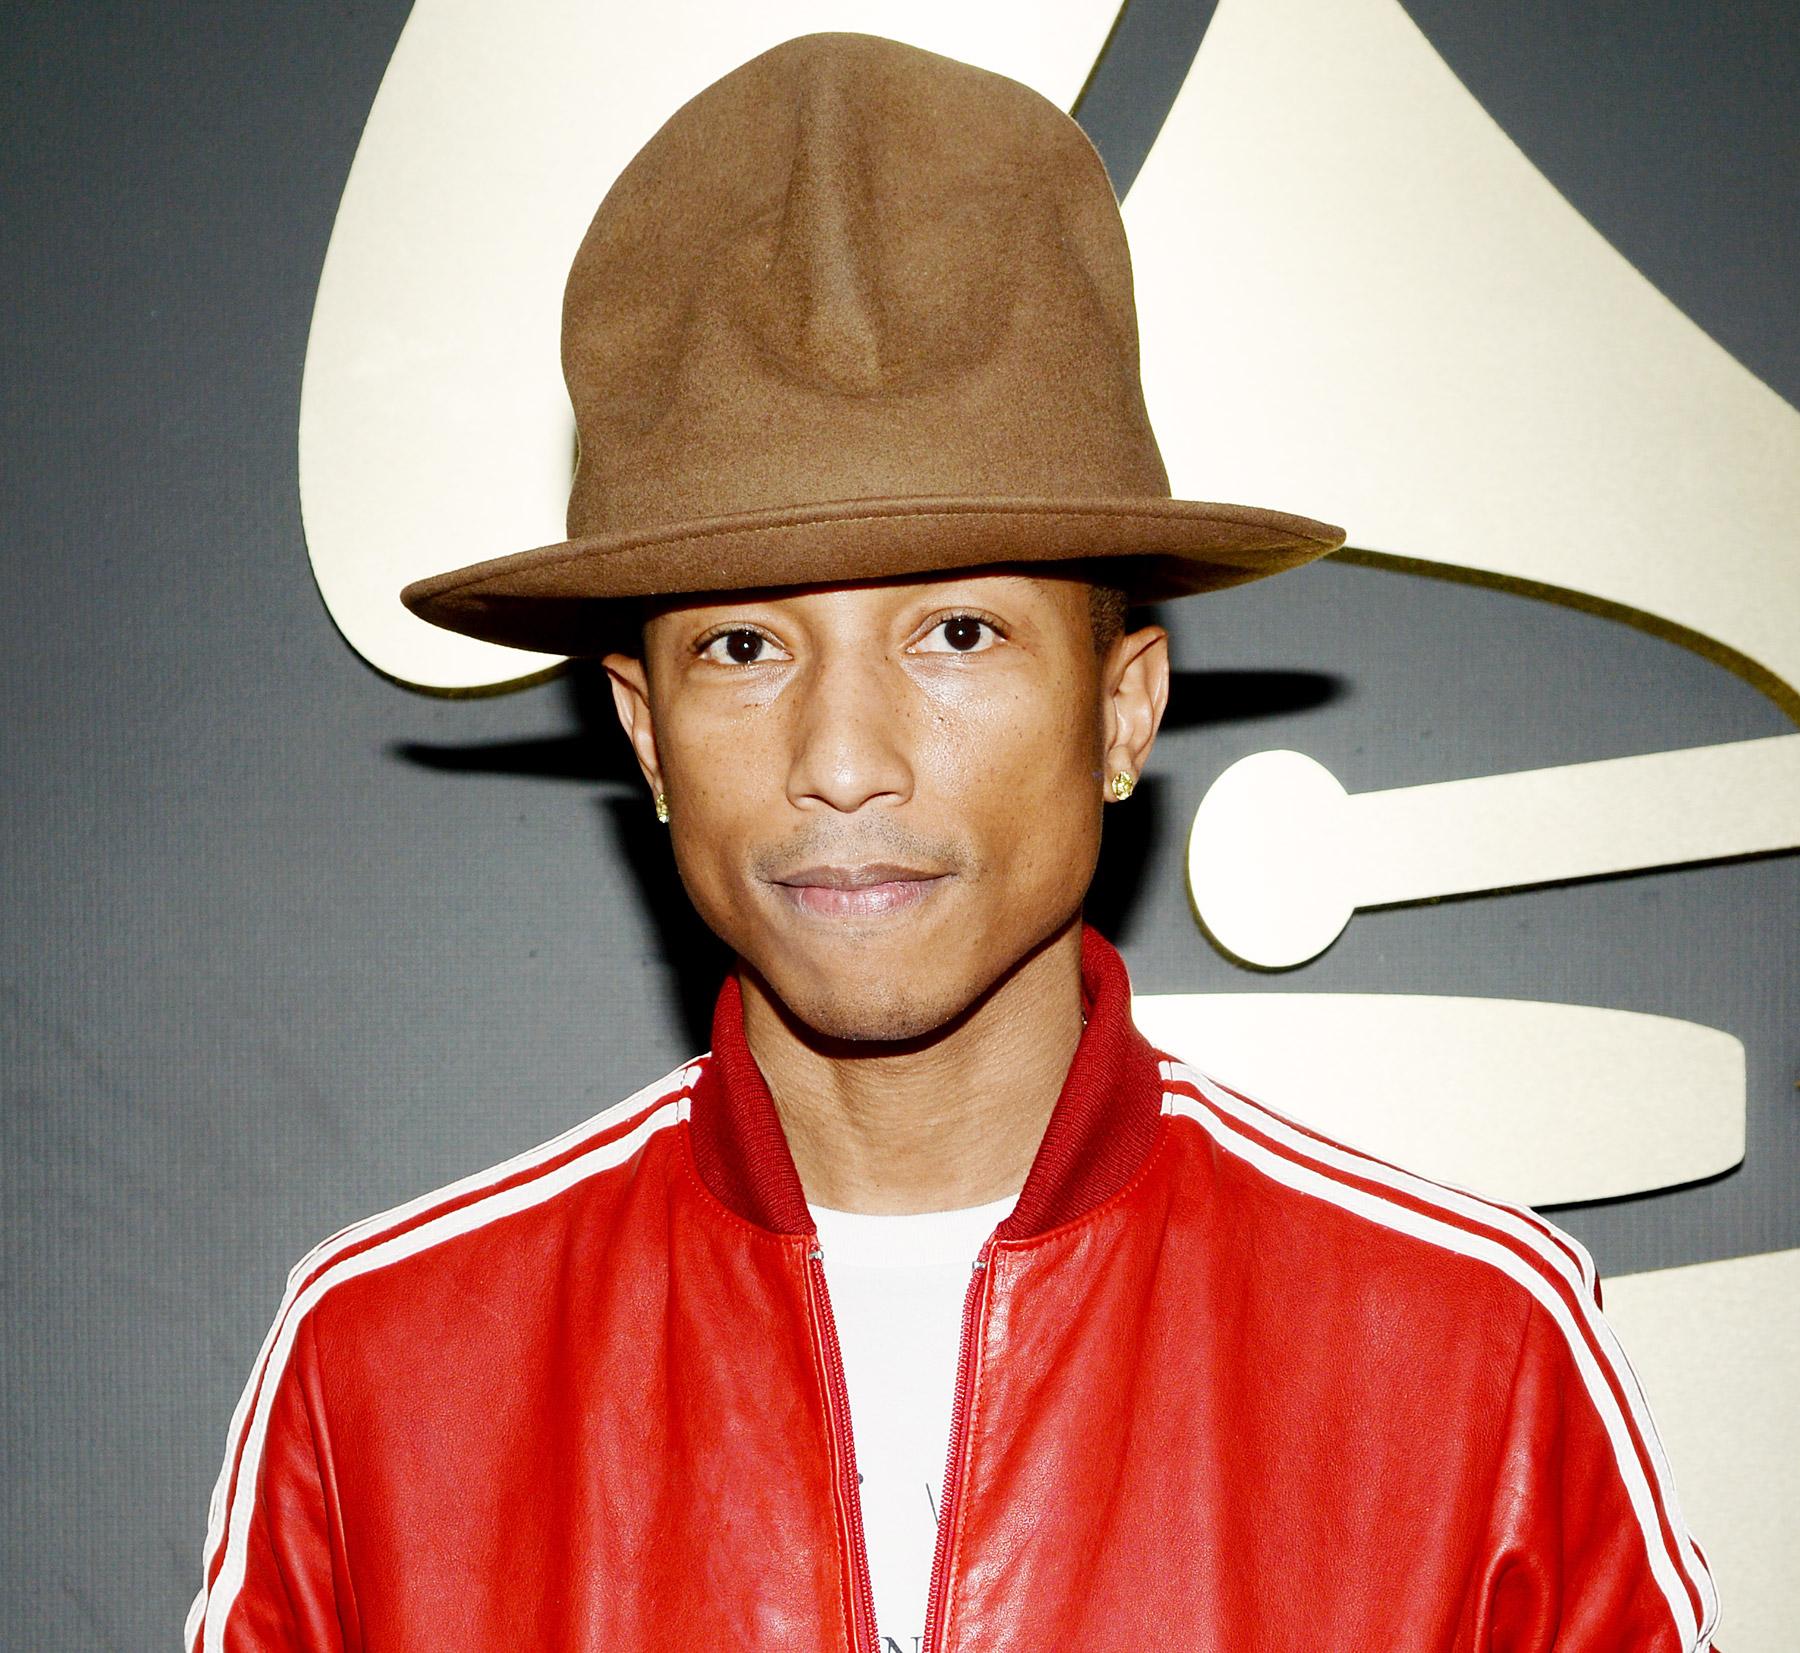 Happy Birthday to Pharrell Williams, who turns 42 today! 